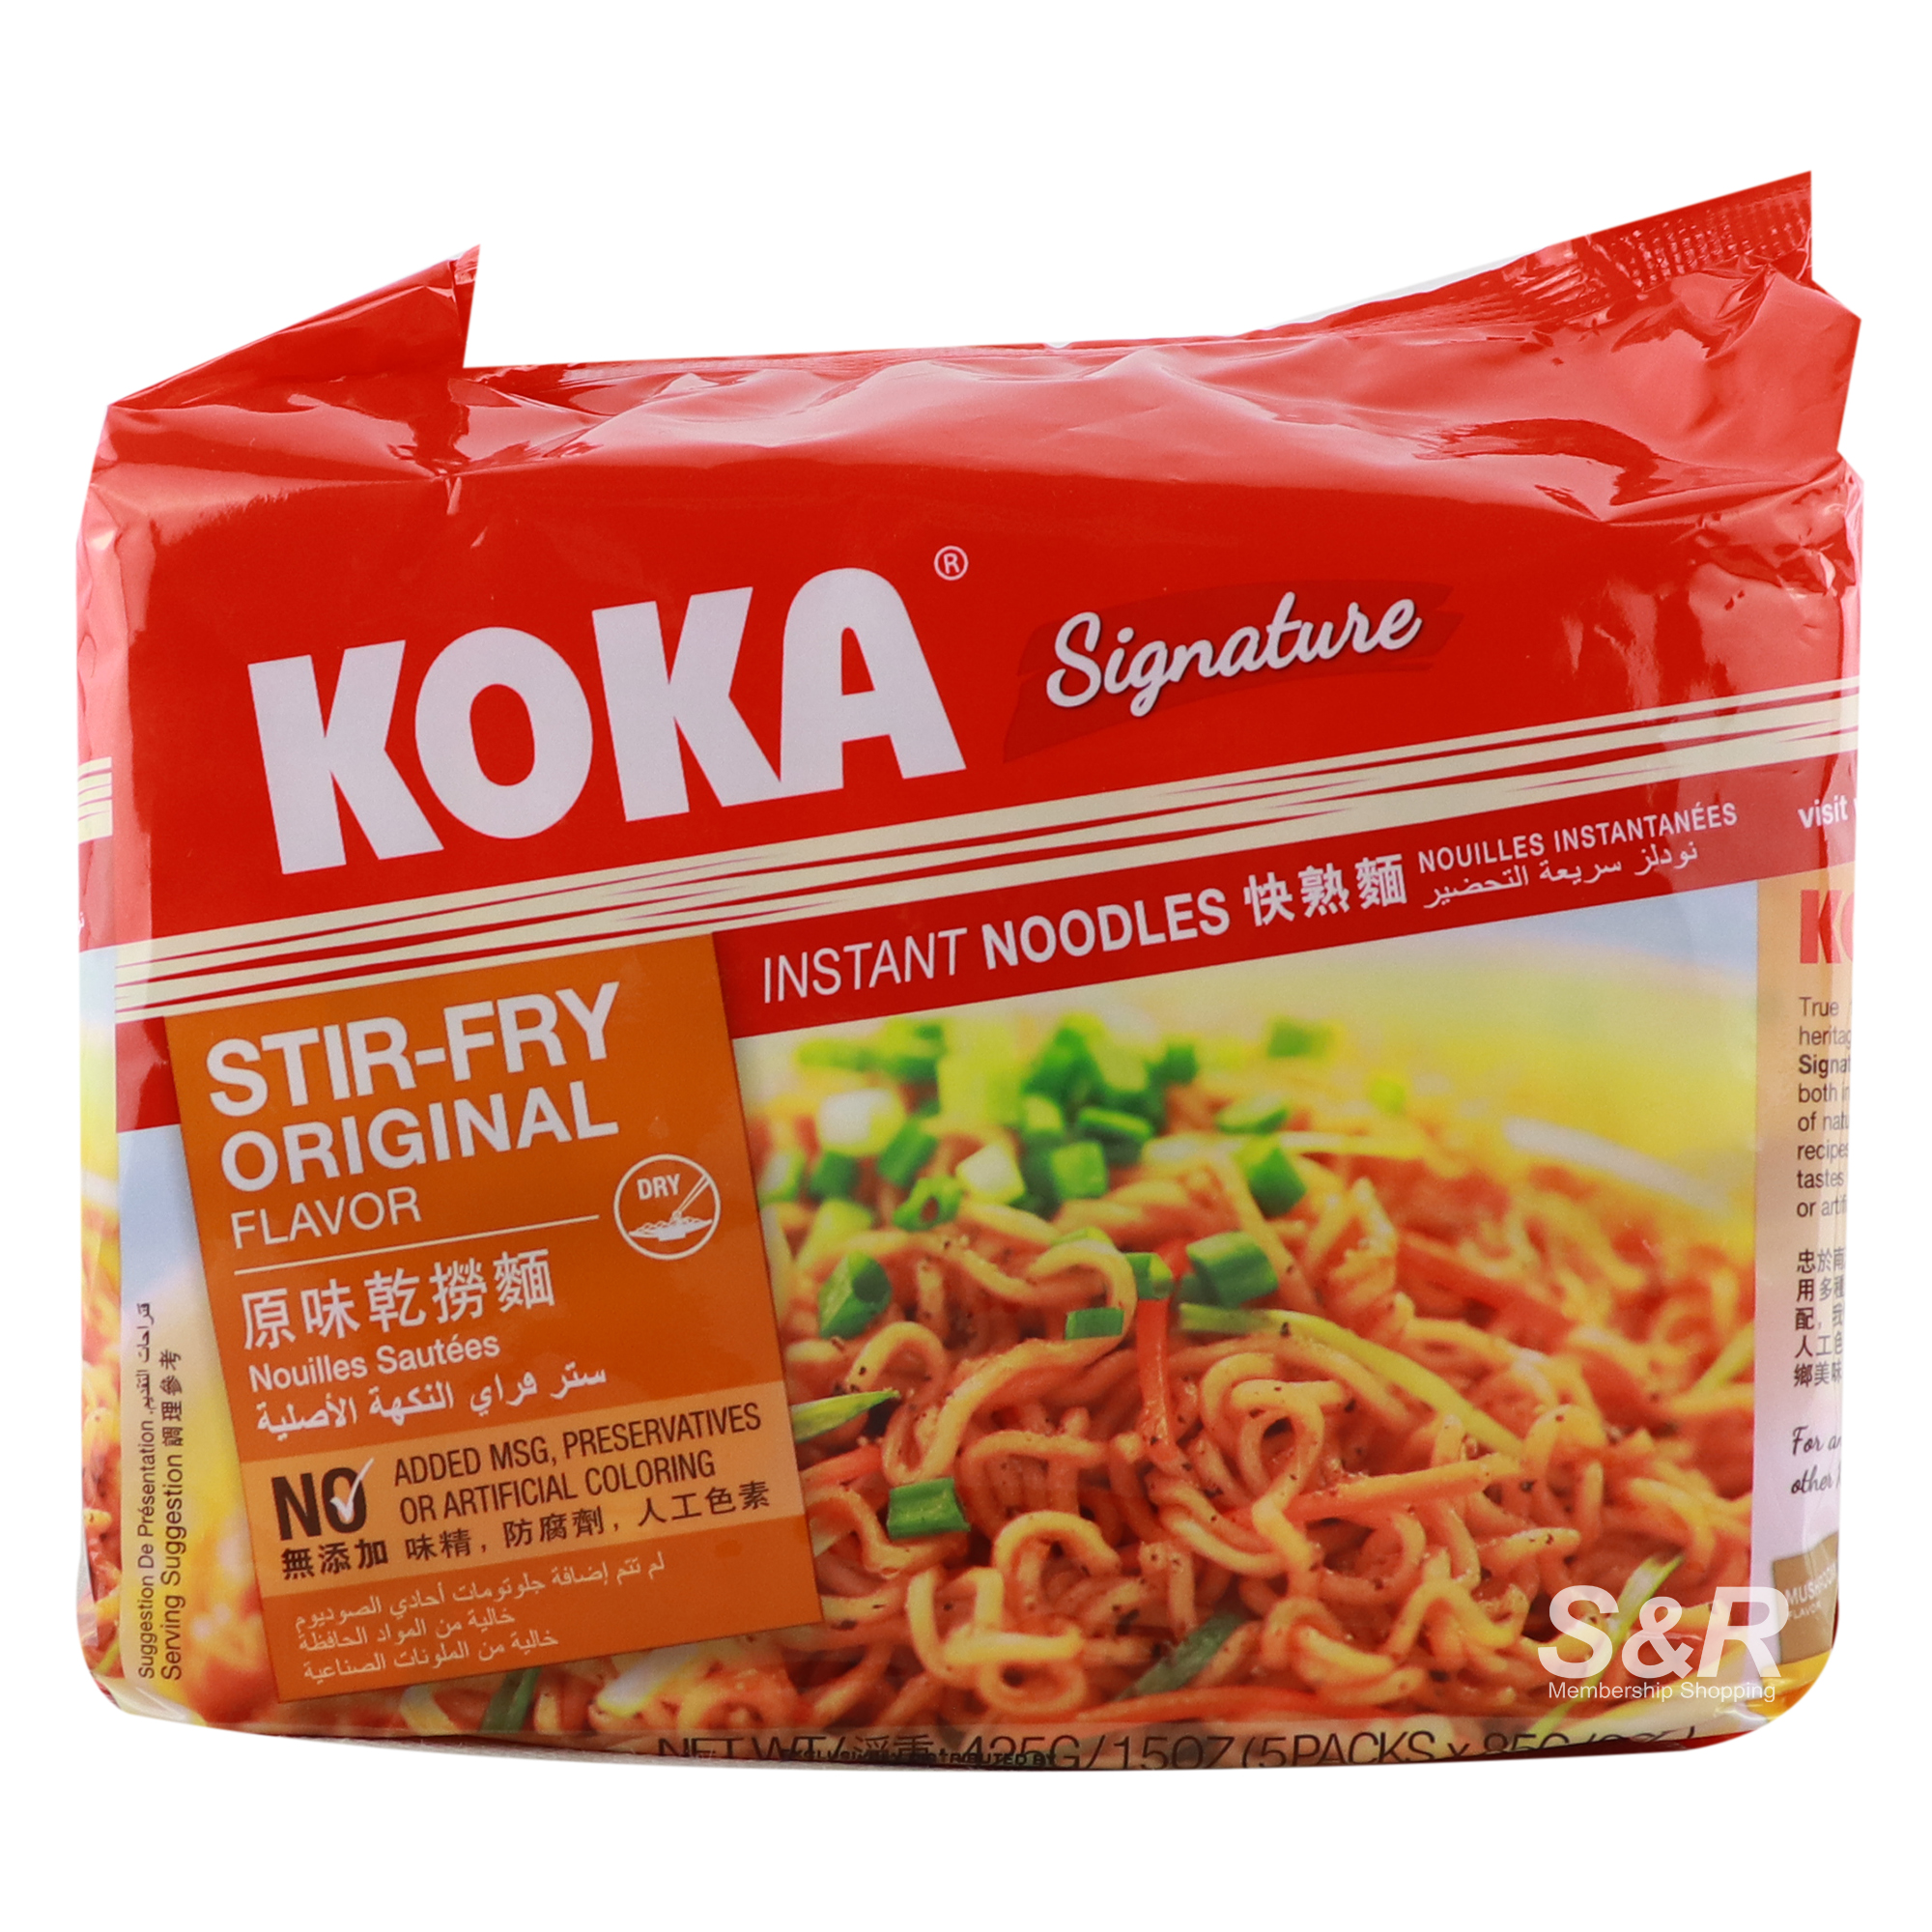 Koka Signature Stir Fry Original Flavor Instant Noodles 5pcs